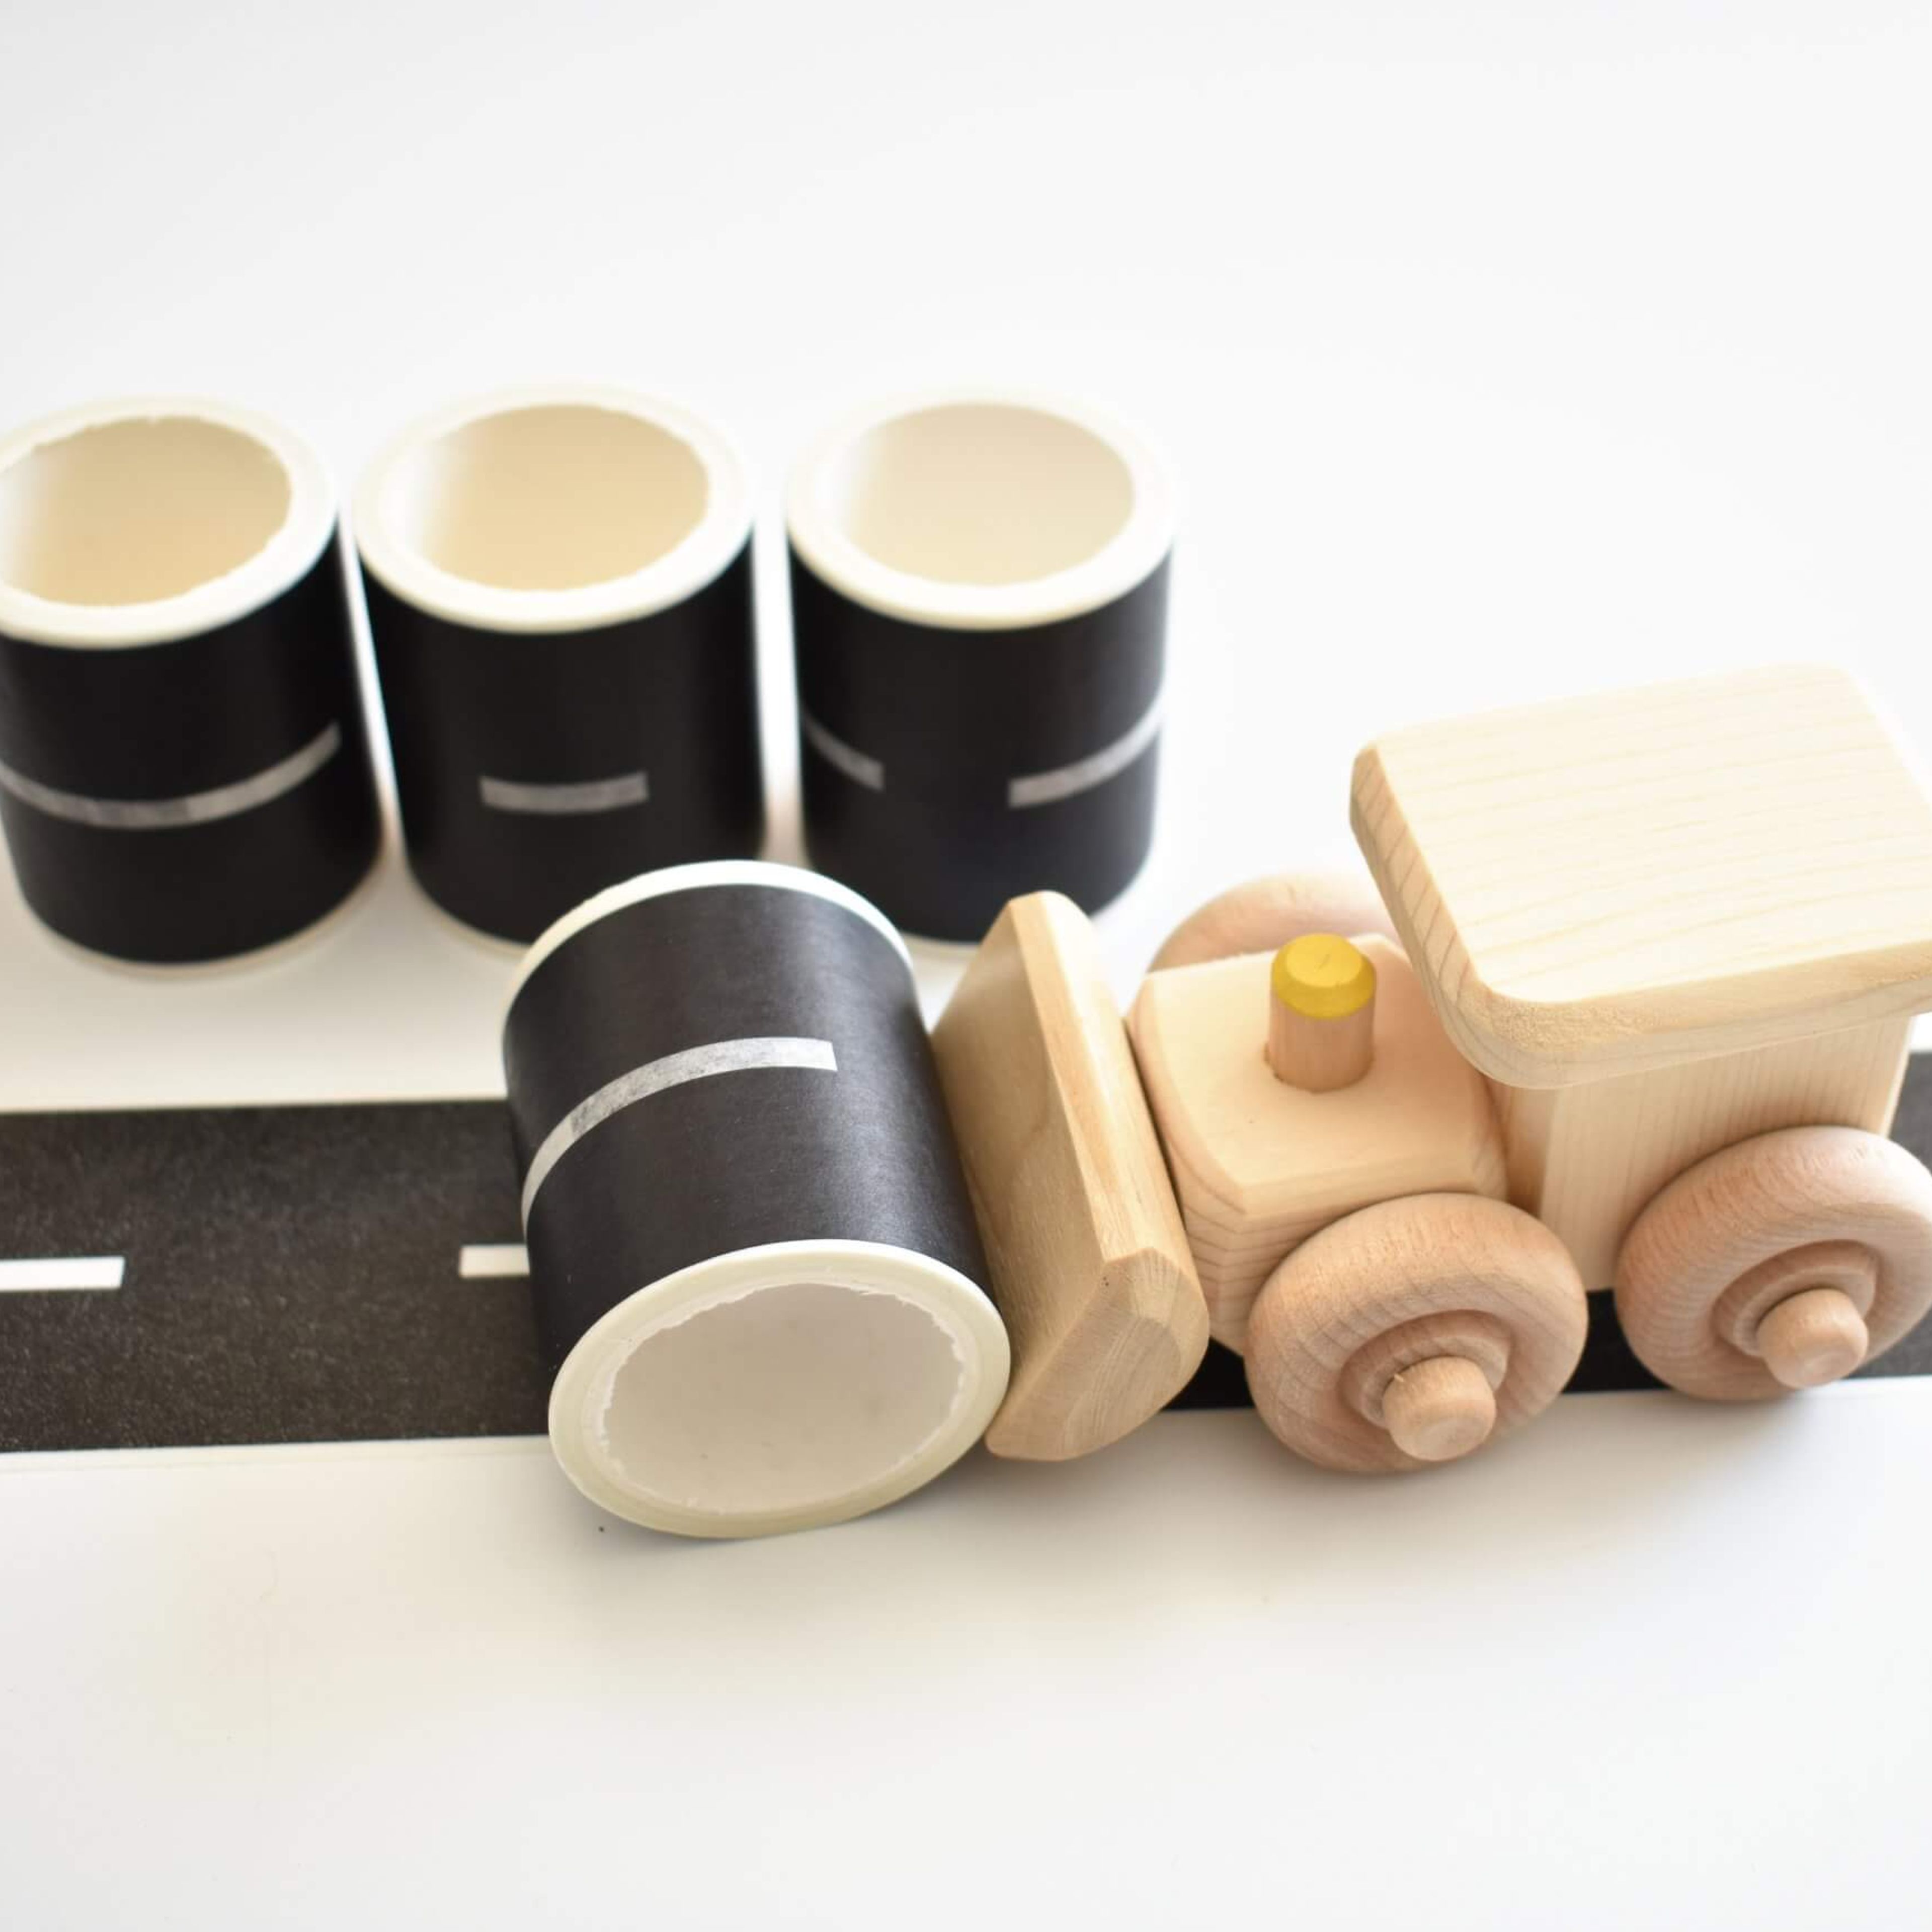 Excavator Toy Truck Gift Set: "My child loves construction!"